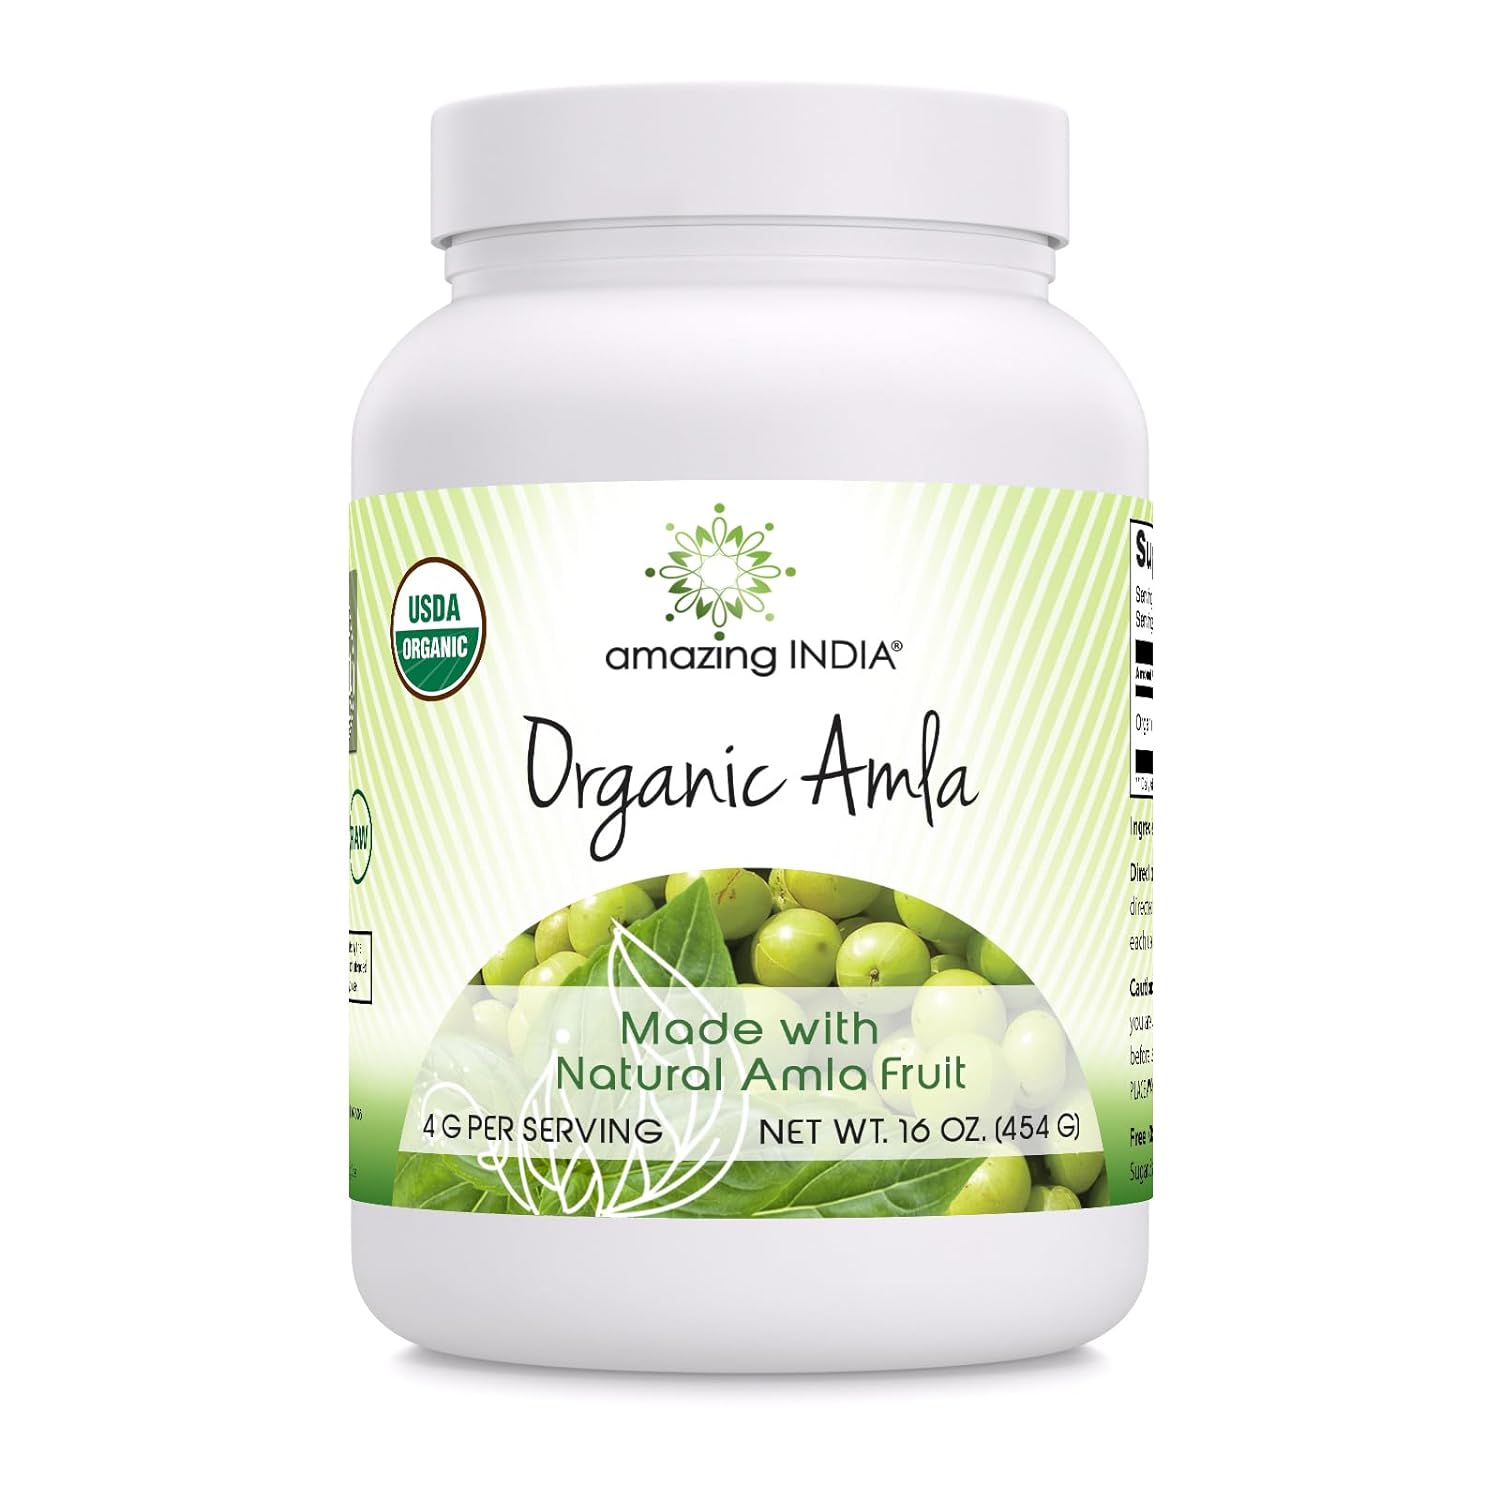 Amazing India USDA Certified Organic Amla Powder Supplement | 16 Oz | Raw Vegan | Non-GMO | Gluten-Free | Made in USA